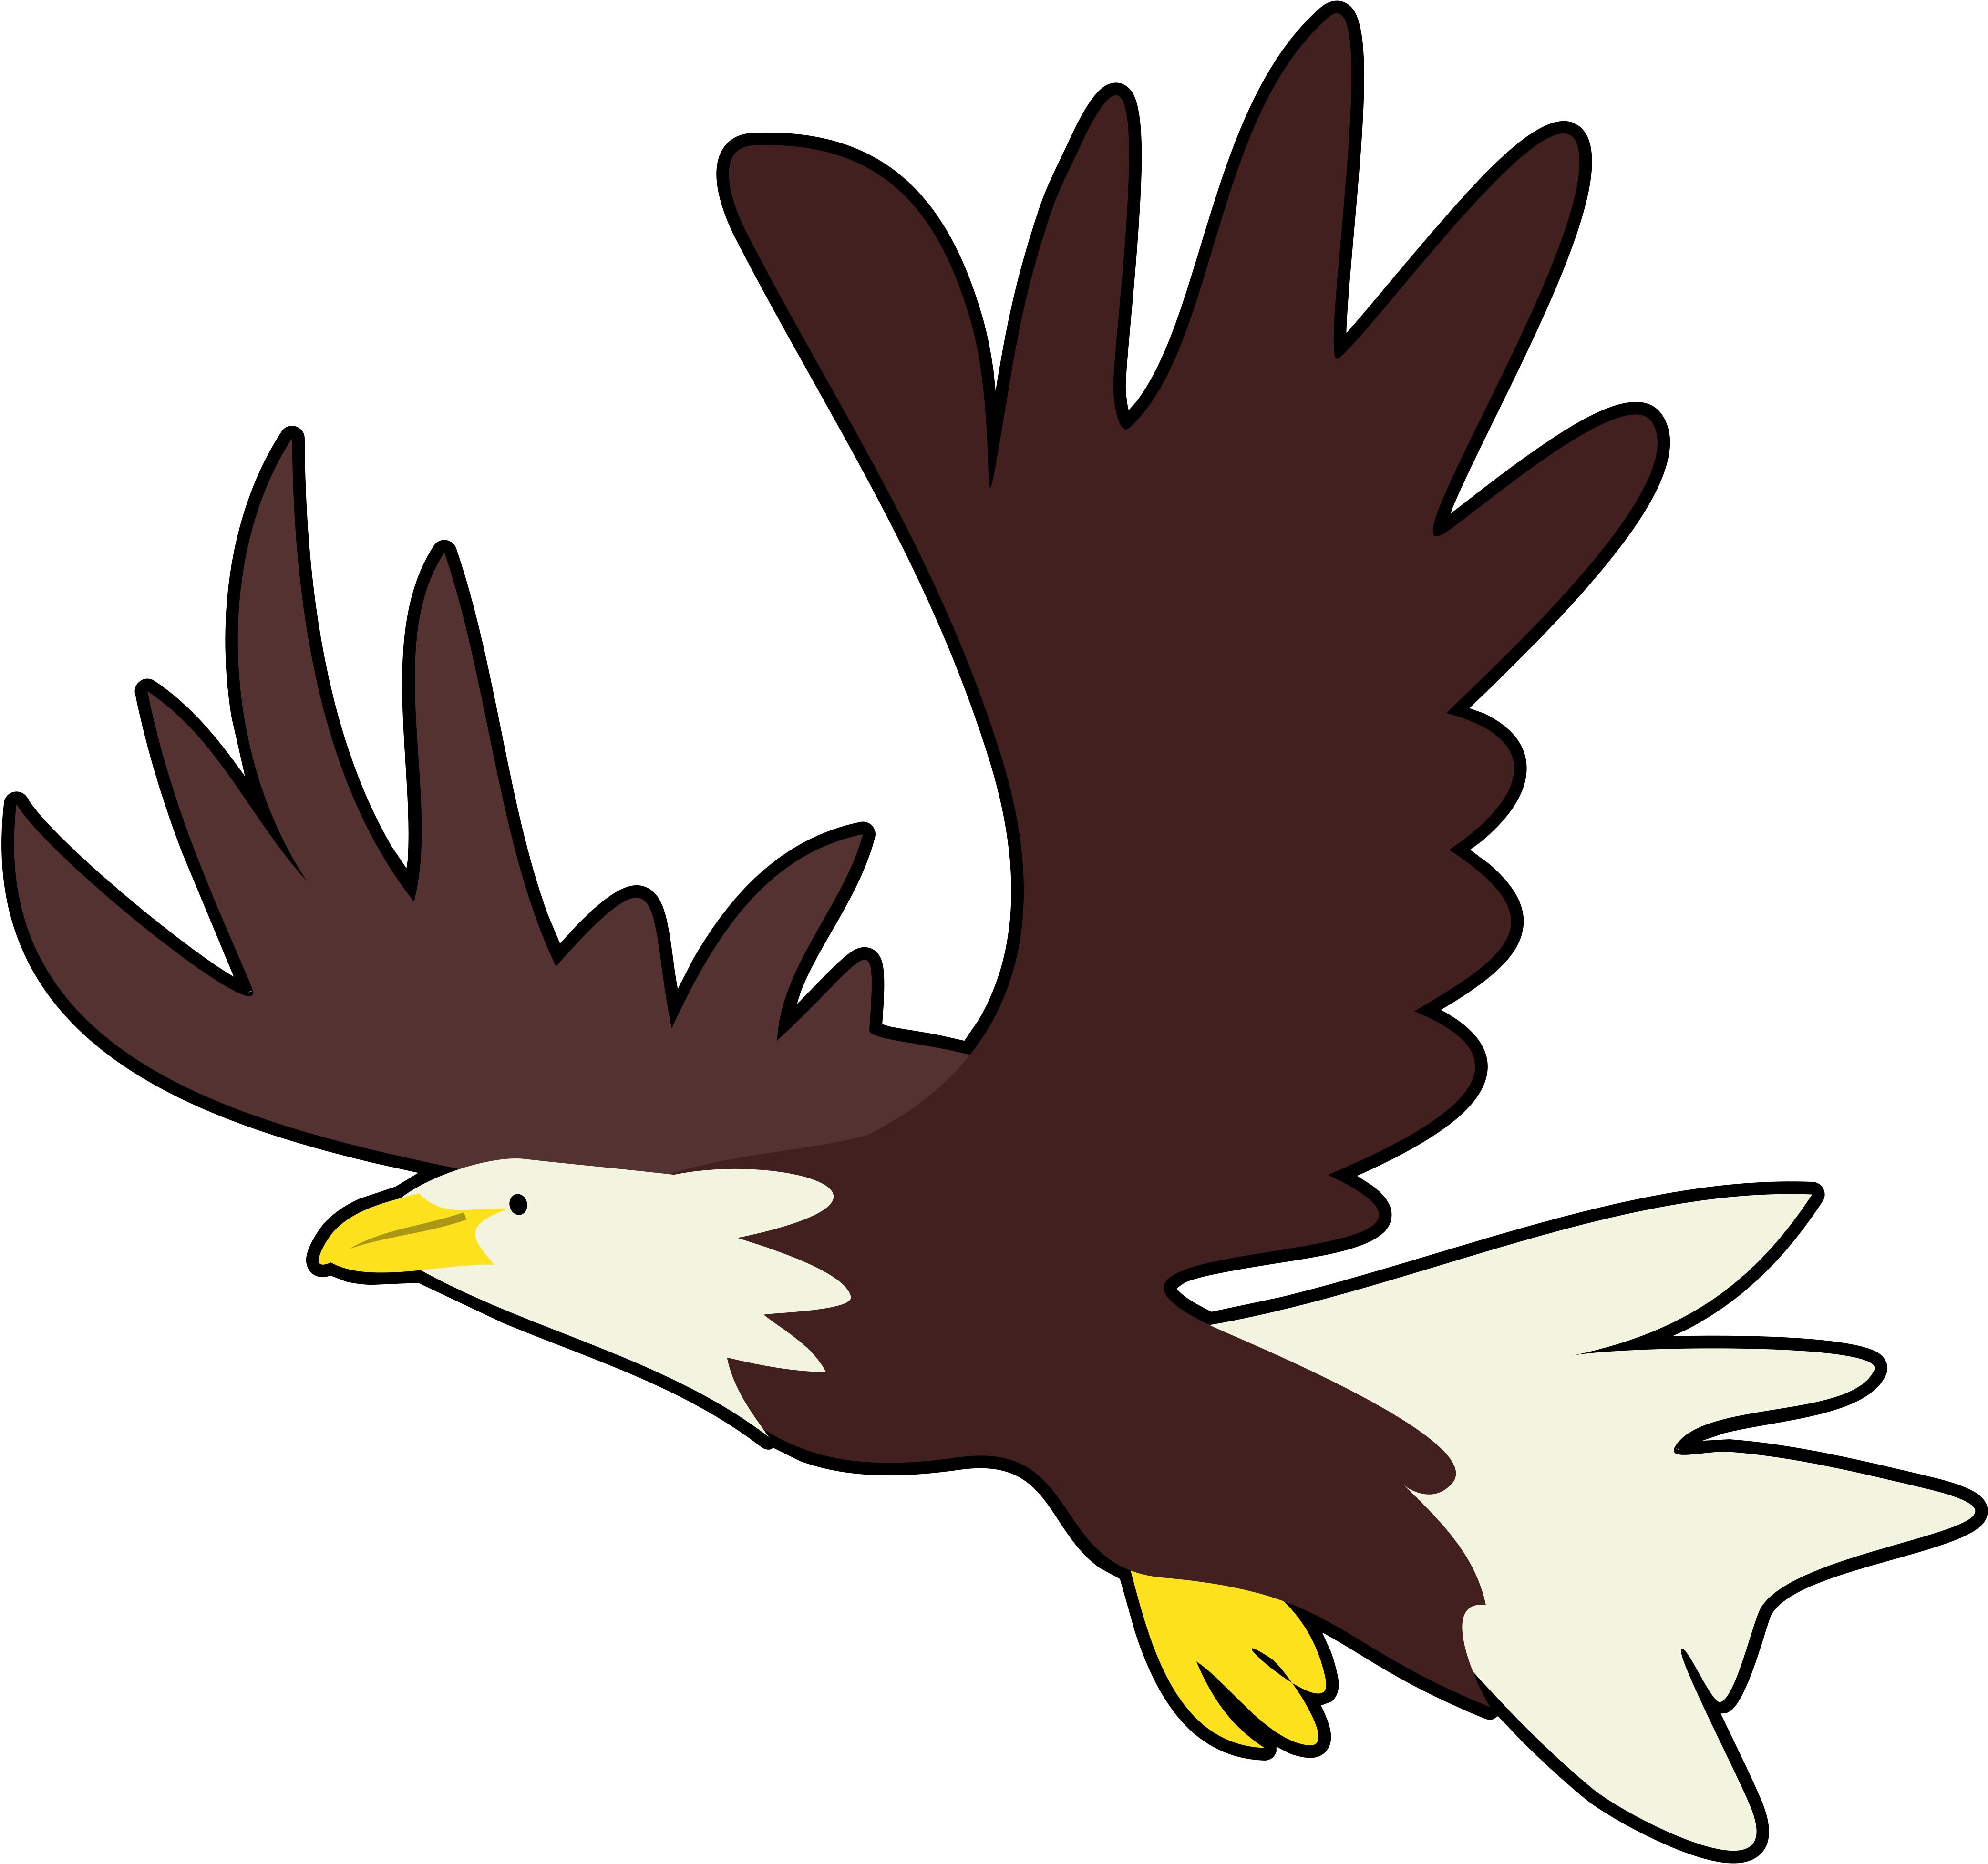 Eagles clipart body. Free eagle man cliparts